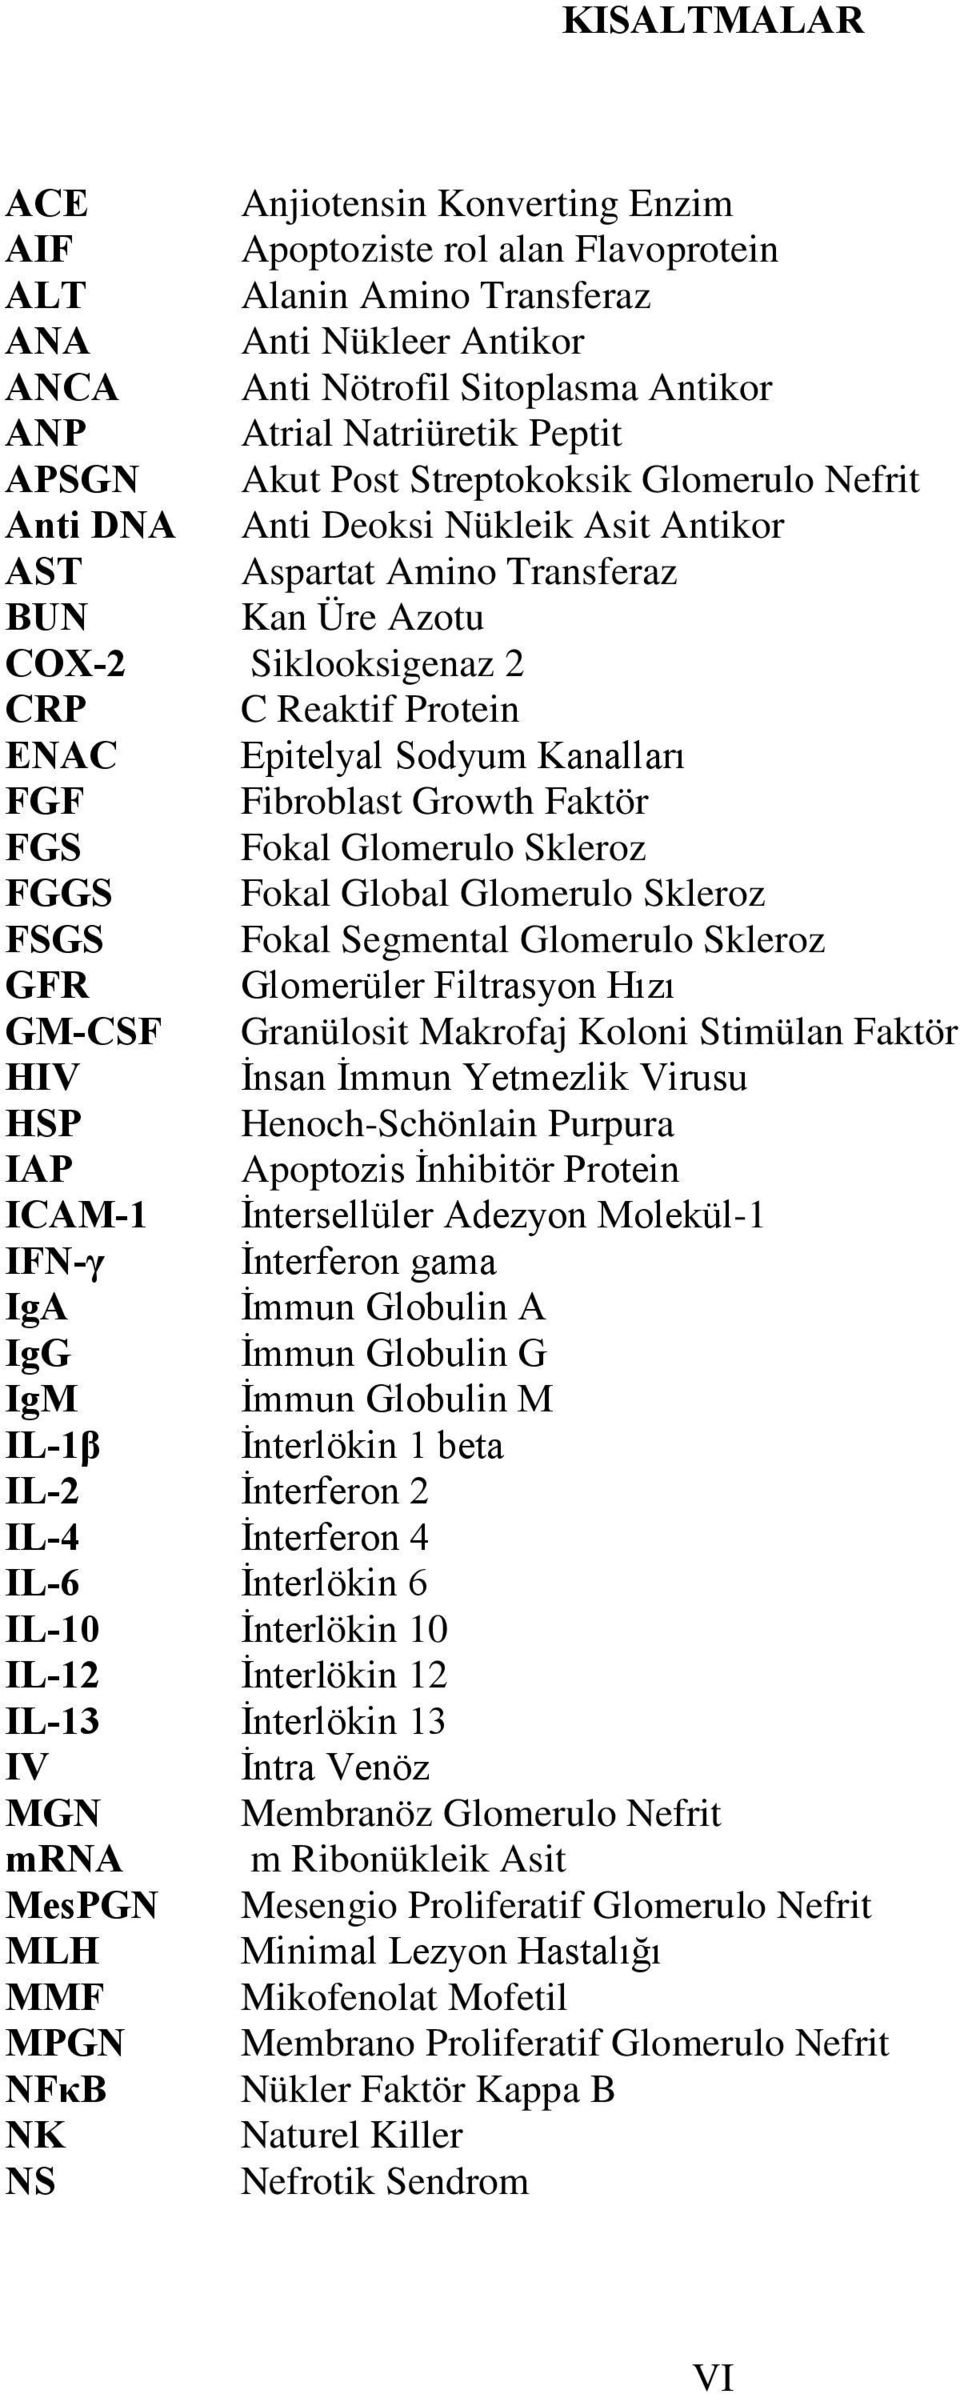 Epitelyal Sodyum Kanalları FGF Fibroblast Growth Faktör FGS Fokal Glomerulo Skleroz FGGS Fokal Global Glomerulo Skleroz FSGS Fokal Segmental Glomerulo Skleroz GFR Glomerüler Filtrasyon Hızı GM-CSF